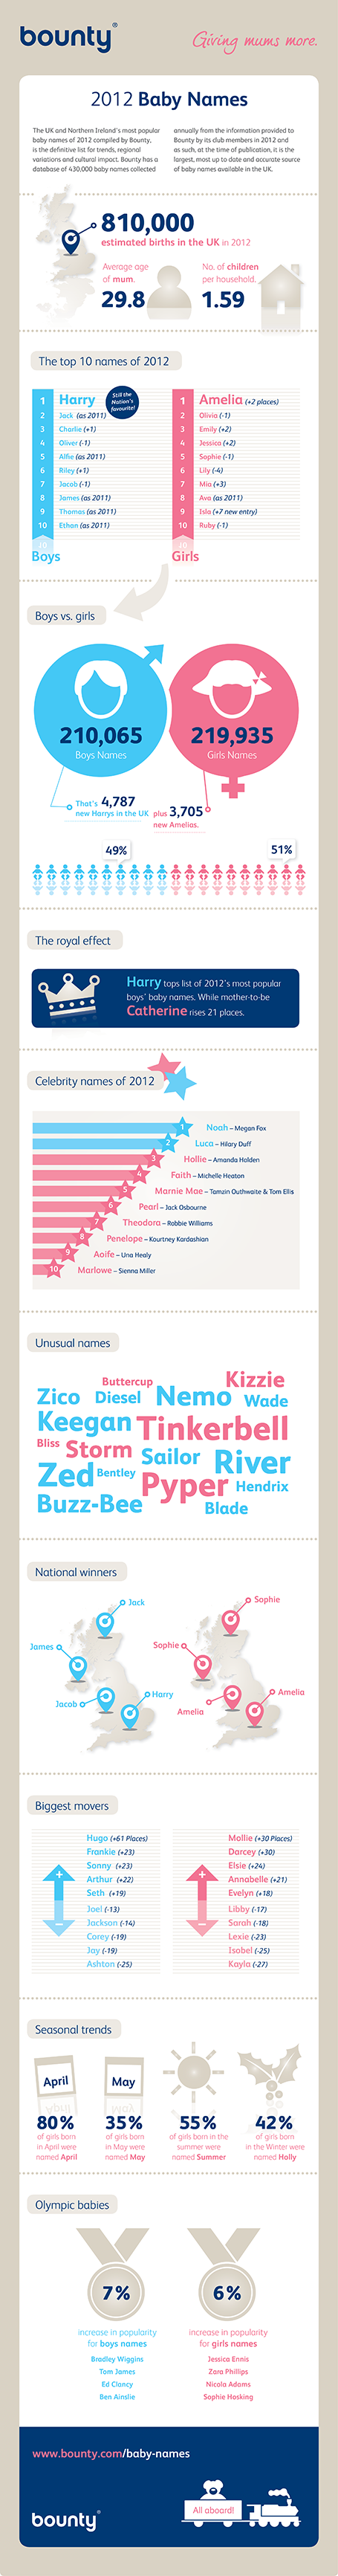 Buzz-bee, Nemo and Zico- the weird baby names of 2012